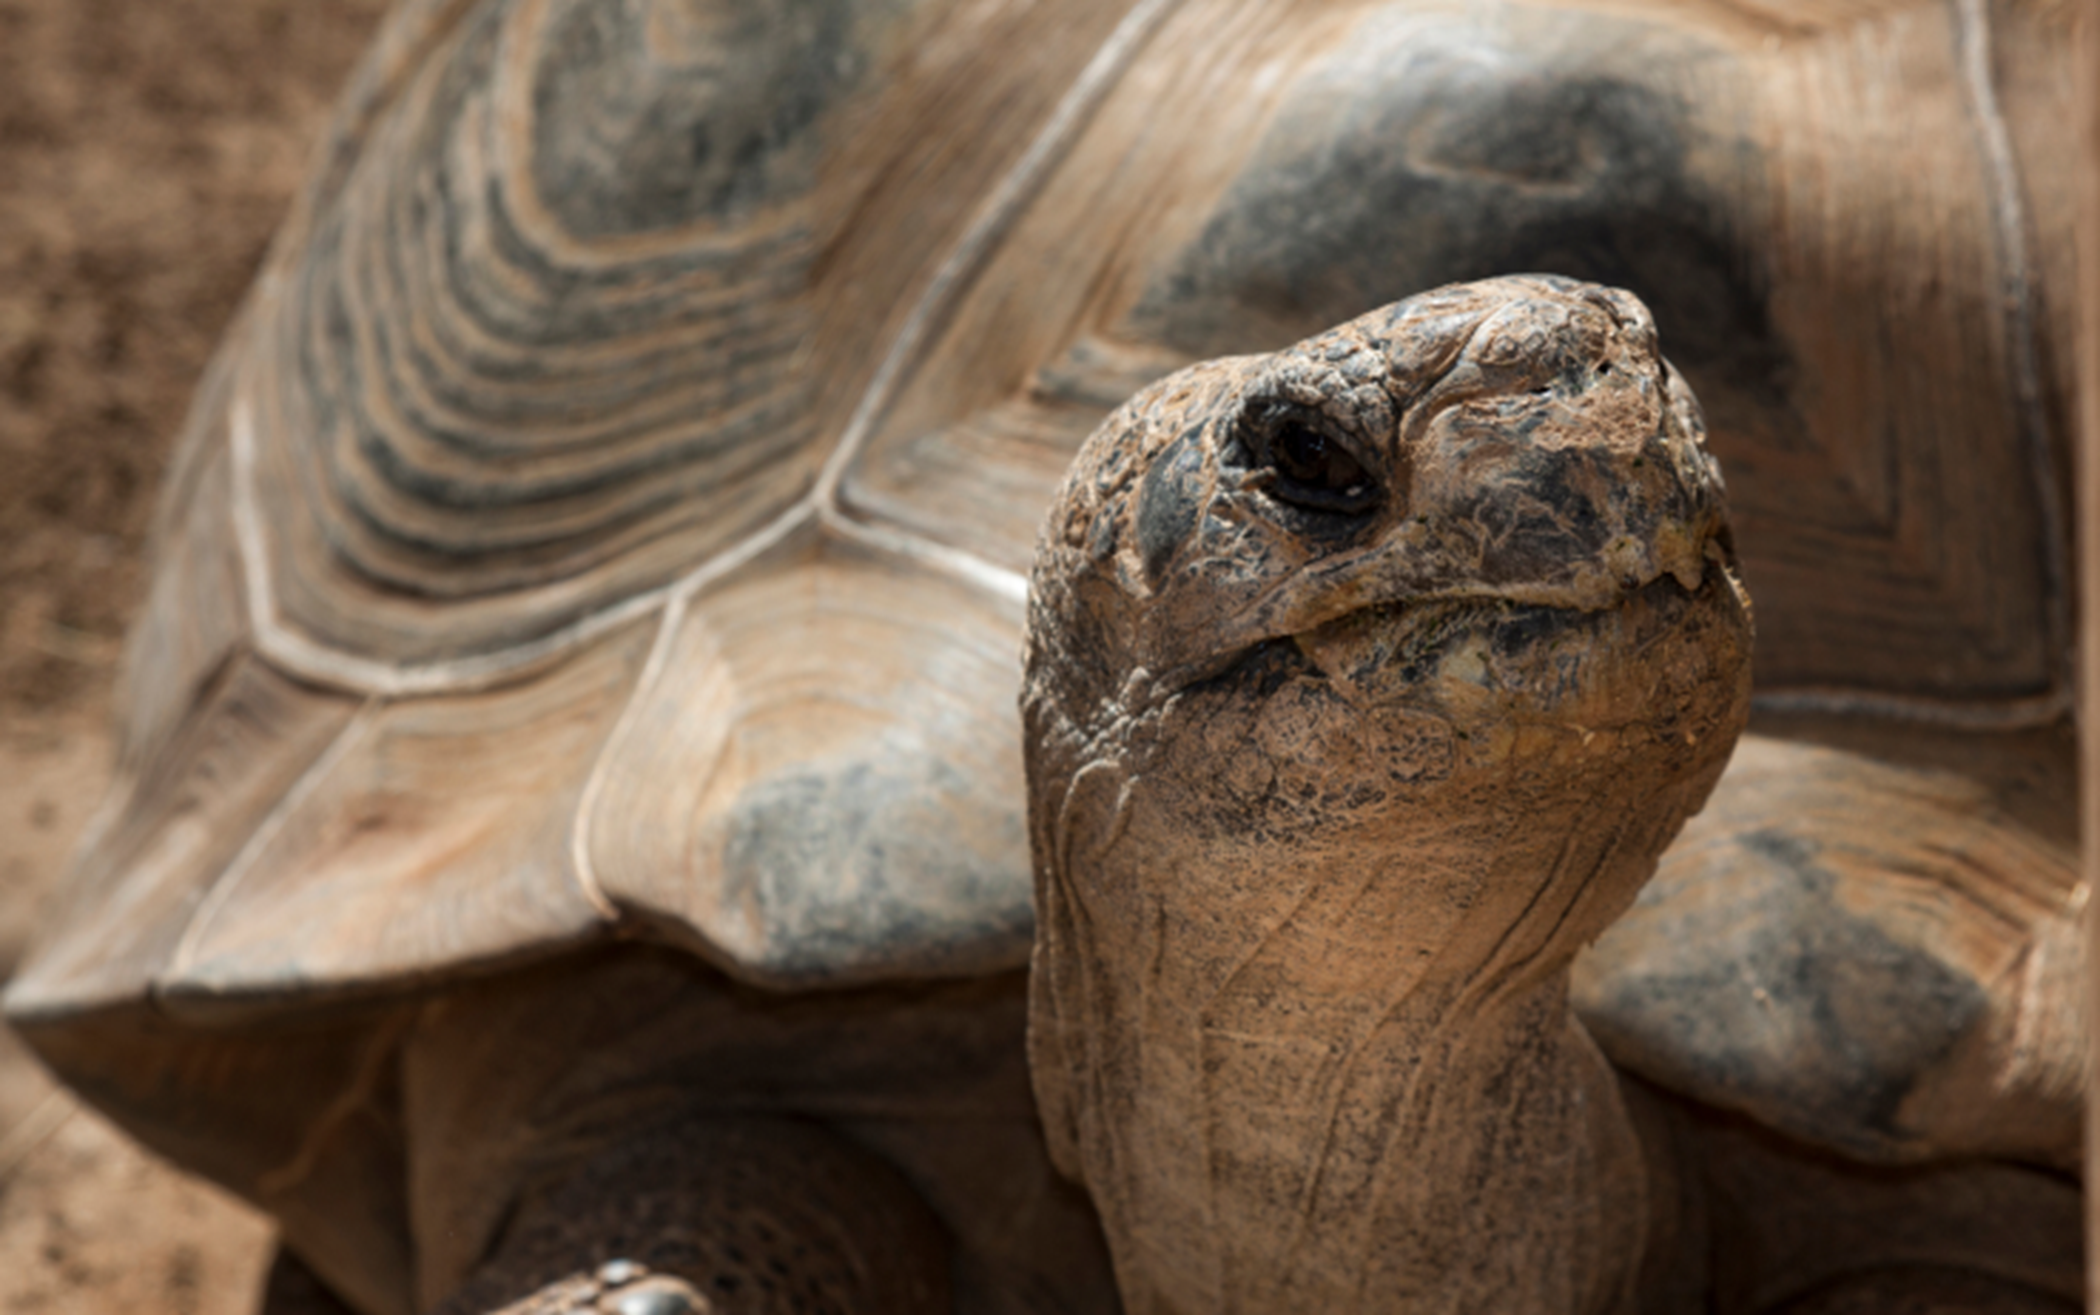 Up close shot of a tortoise